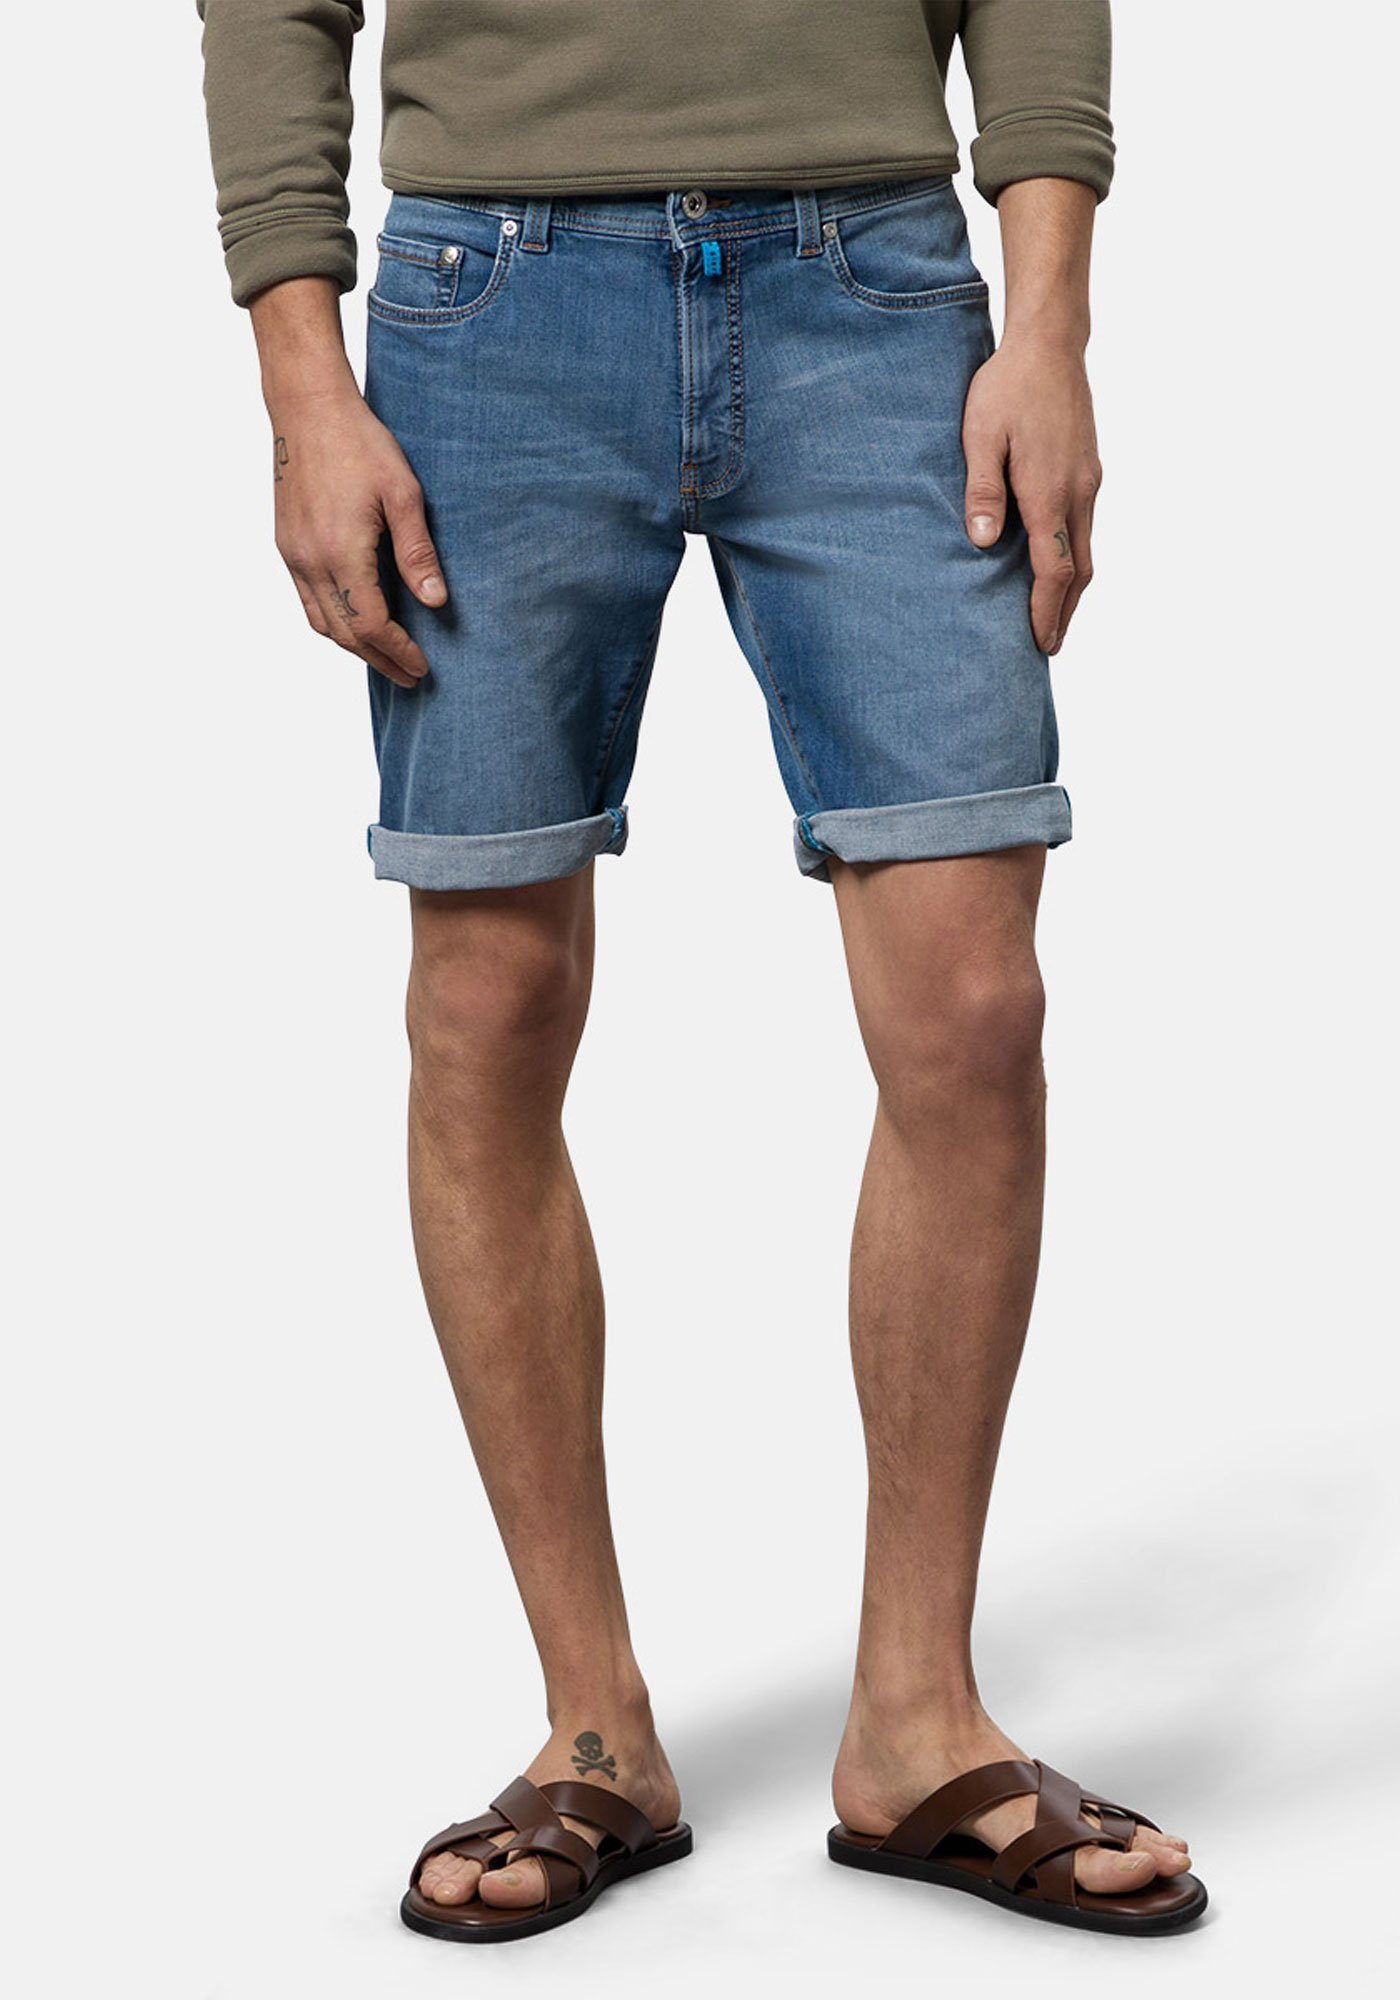 Pierre Cardin Jeansbermudas Lyon 5-Pocket Futureflex Denim Jeans Shorts Vintage Summer Blue